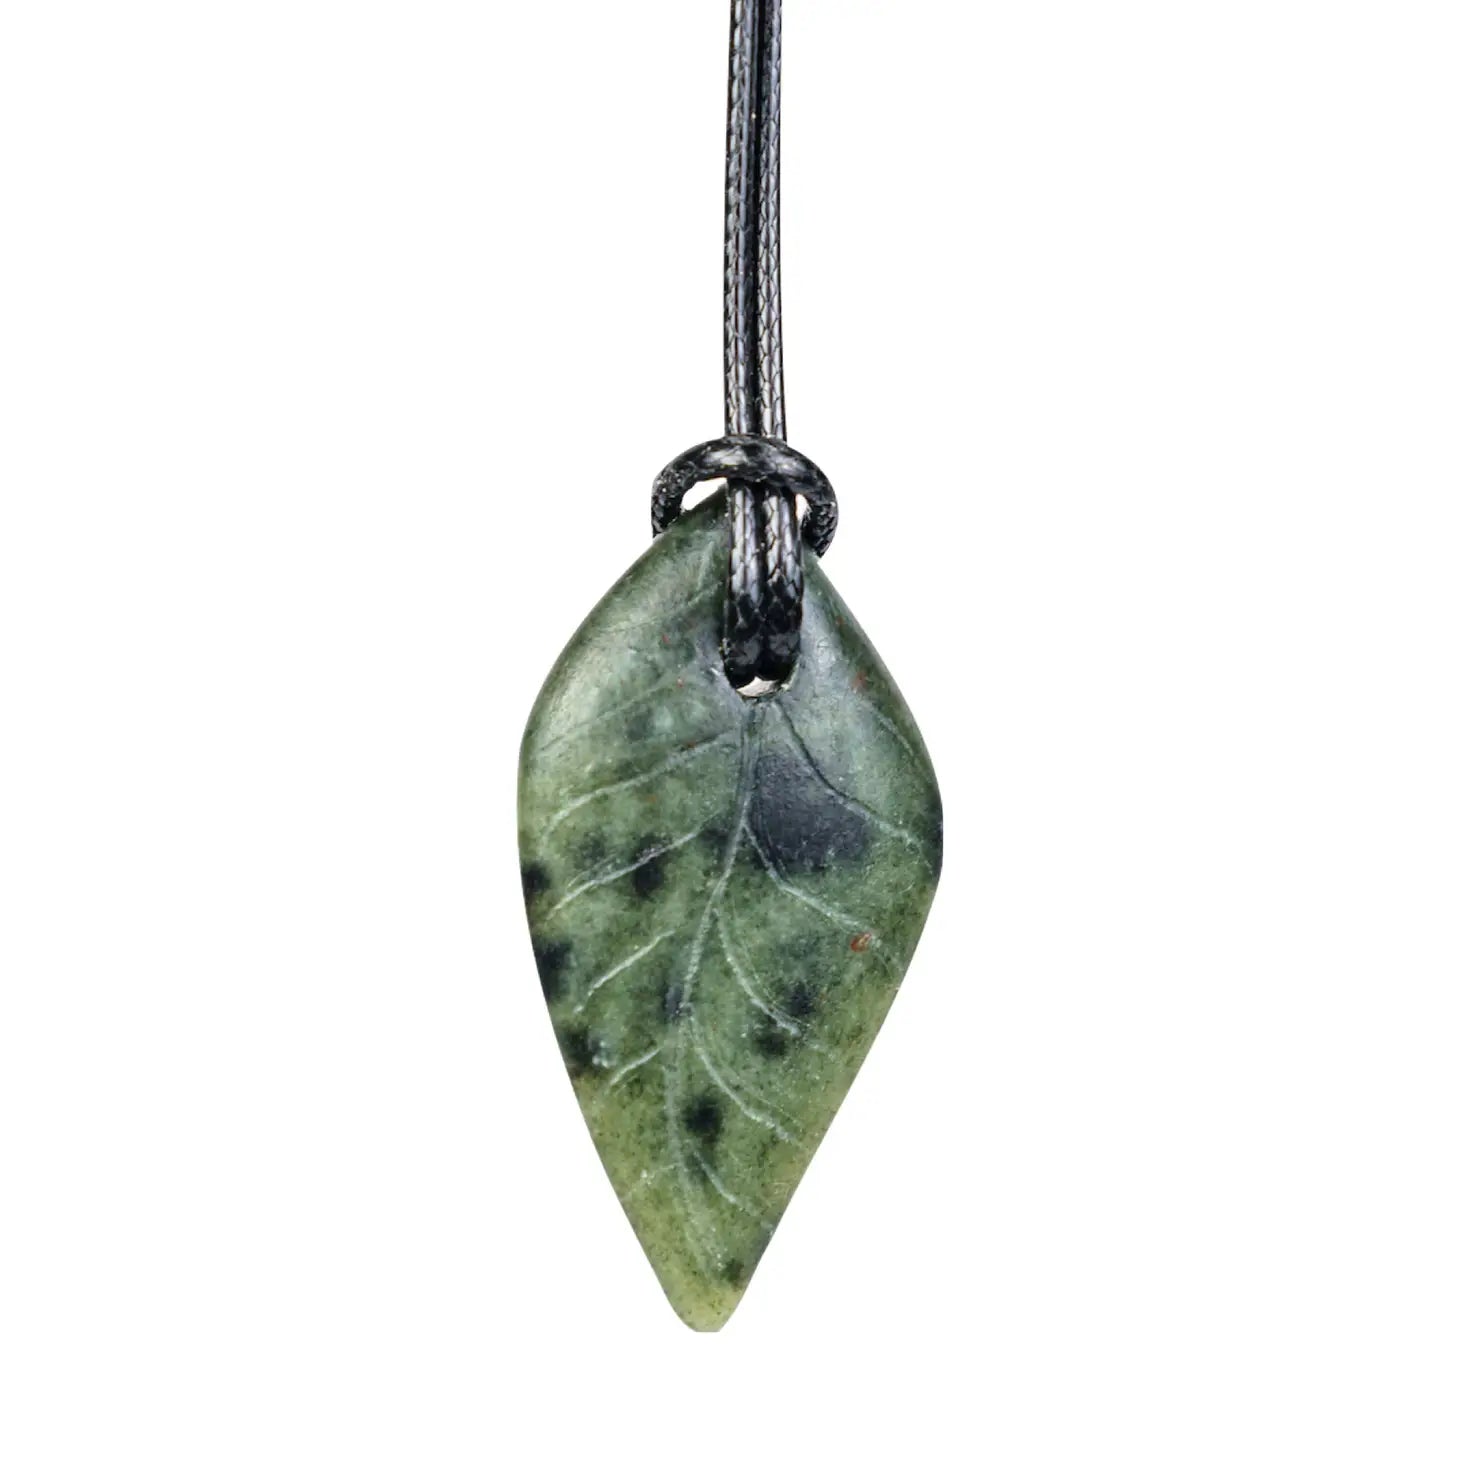 Soapstone Jewelry leaf pendant